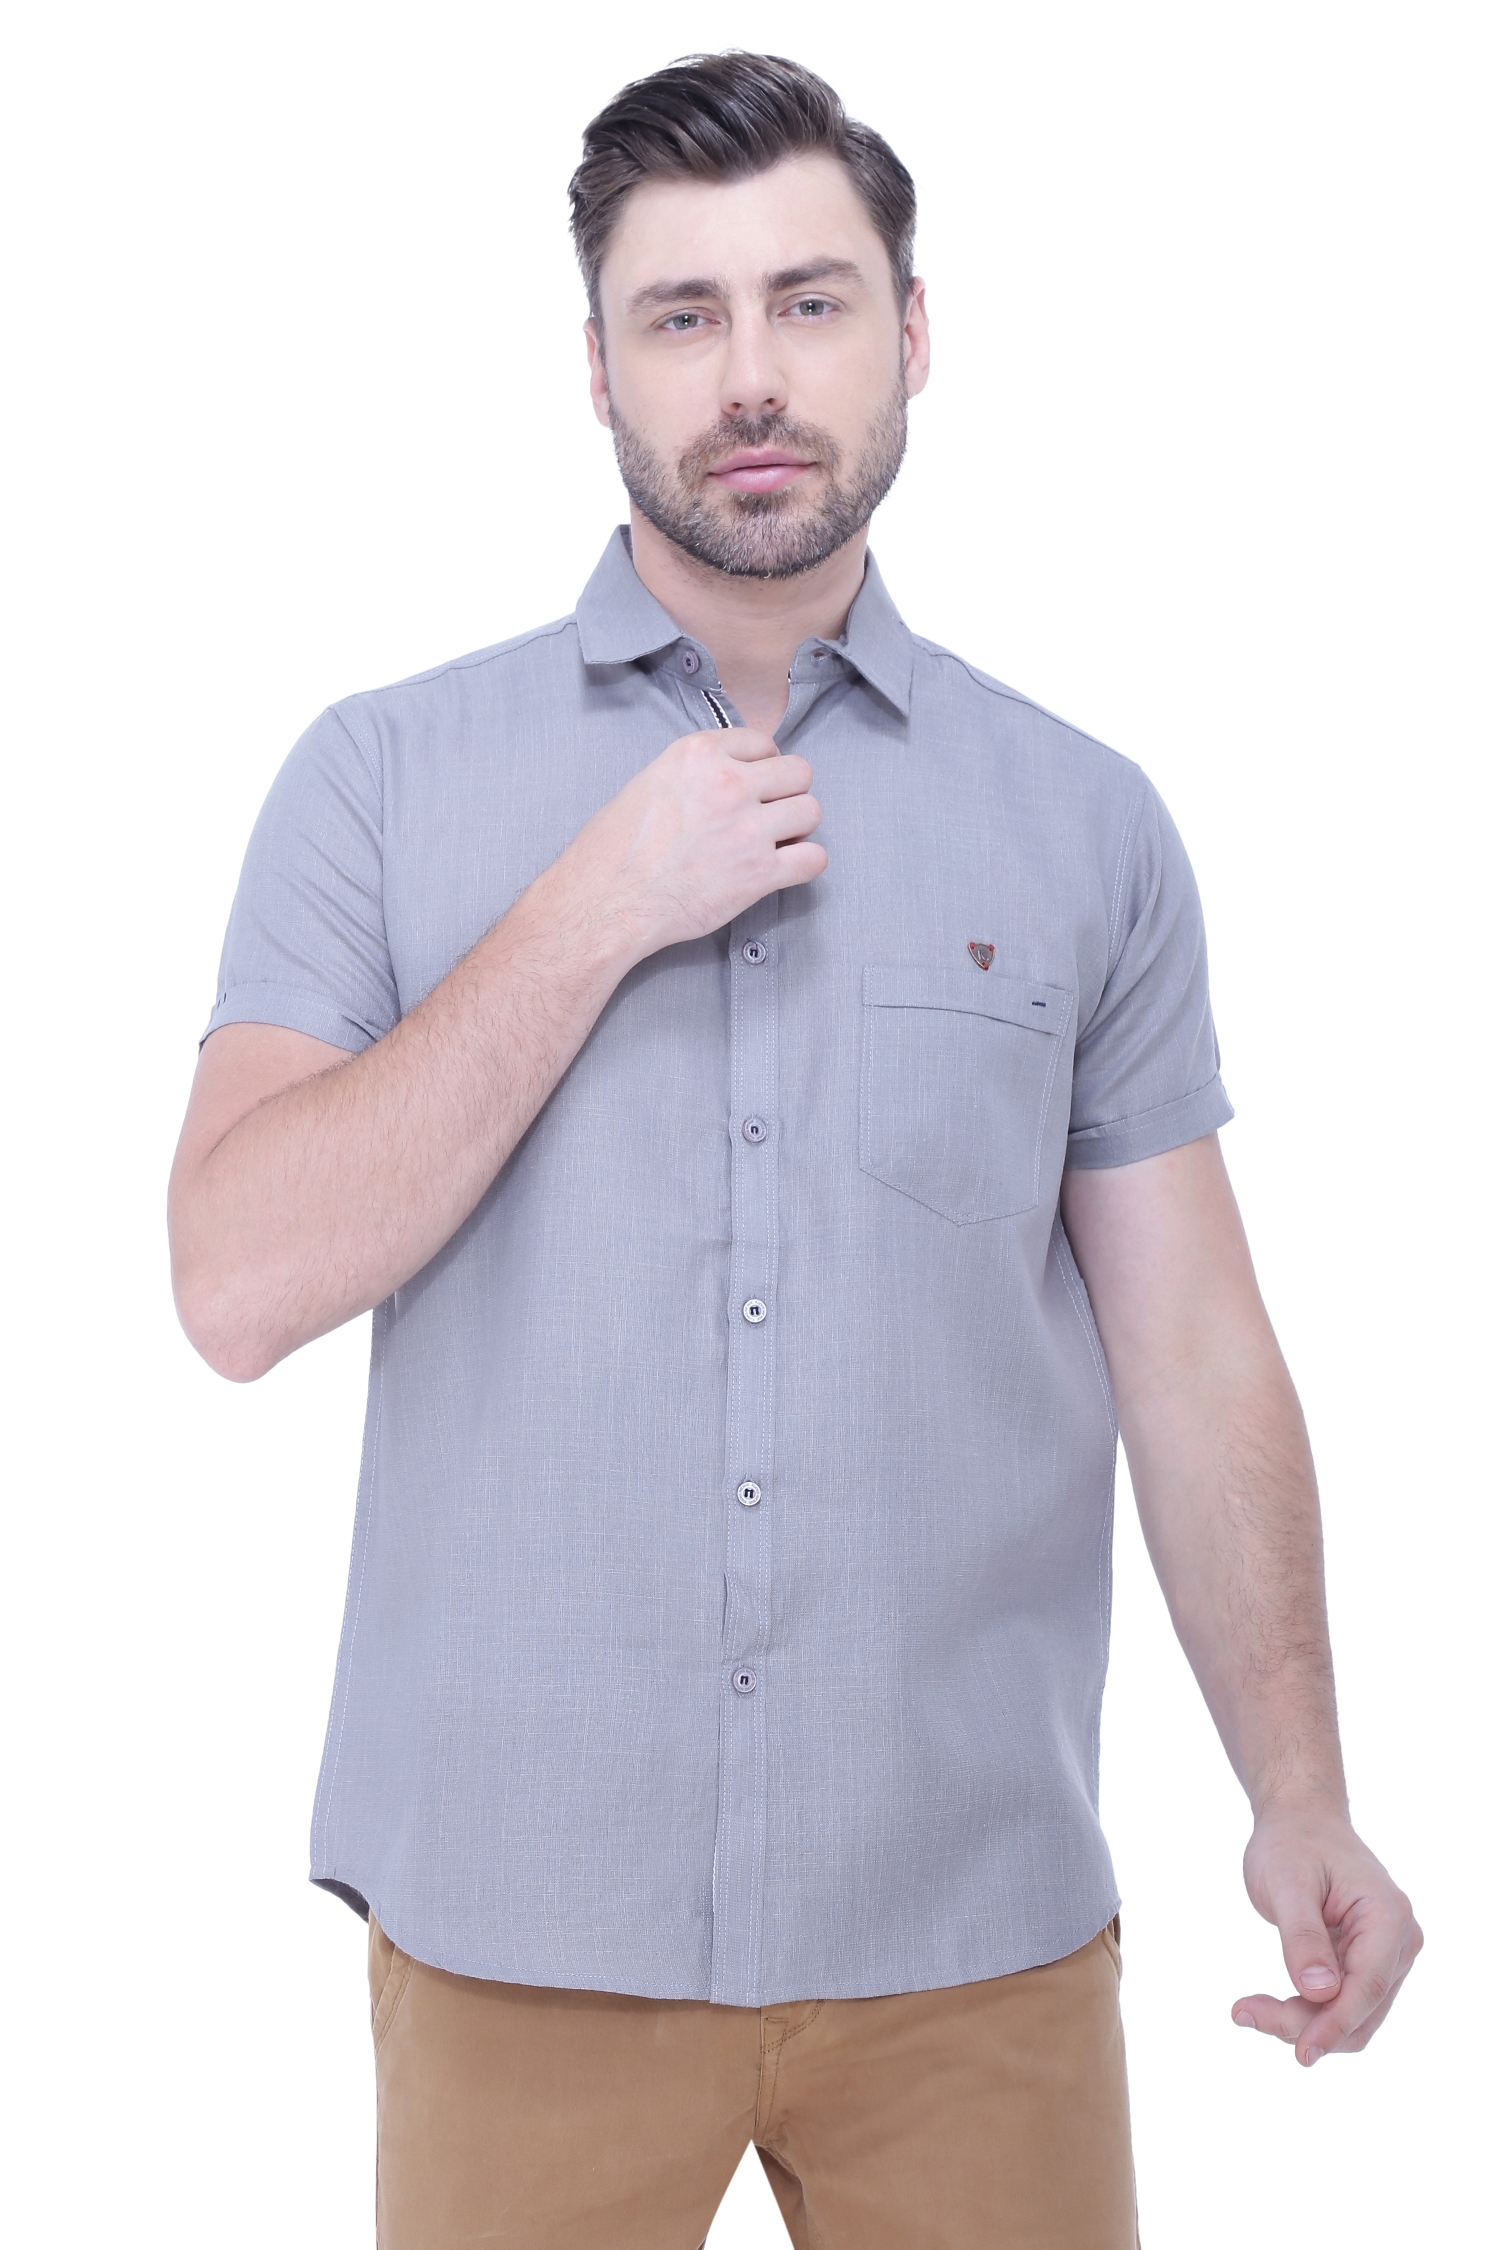 Kuons Avenue | Kuons Avenue Men's Linen Blend Half Sleeves Casual Shirt-KACLHS1236